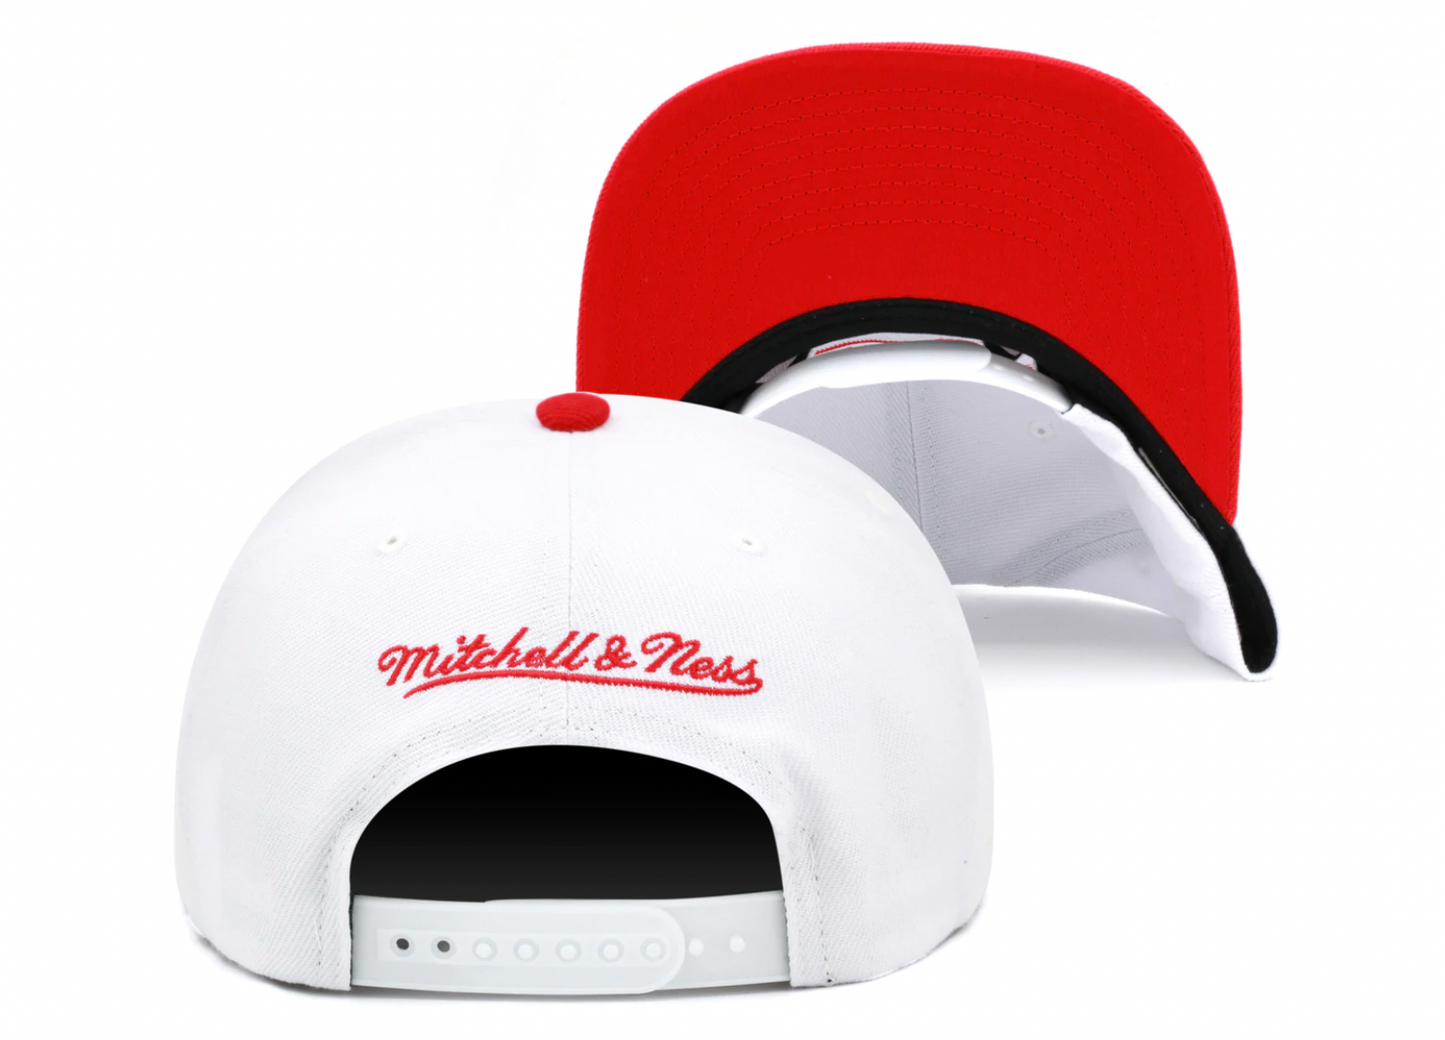 Mens NBA Atlanta Hawks 2 Tone White And Red Mitchell And Ness Basic Core Snapback Hat